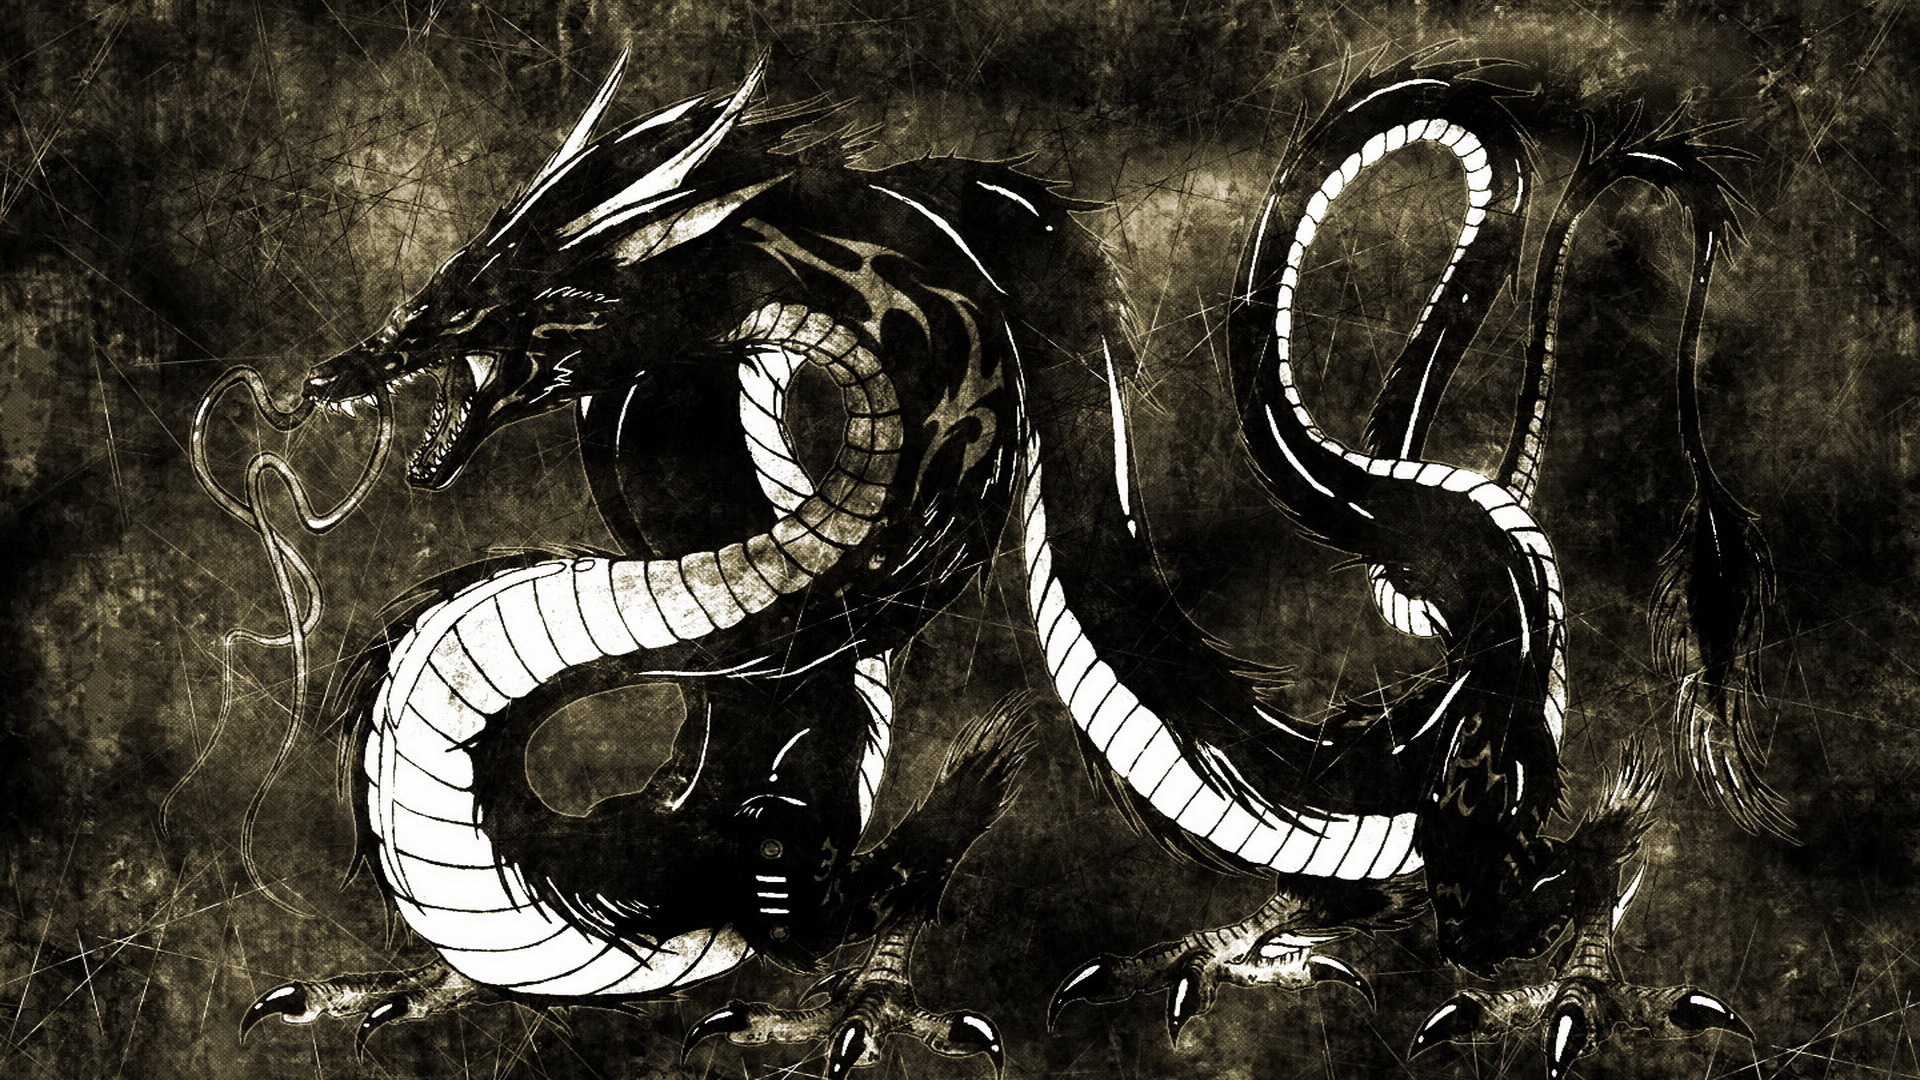 Сюаньлун черный дракон